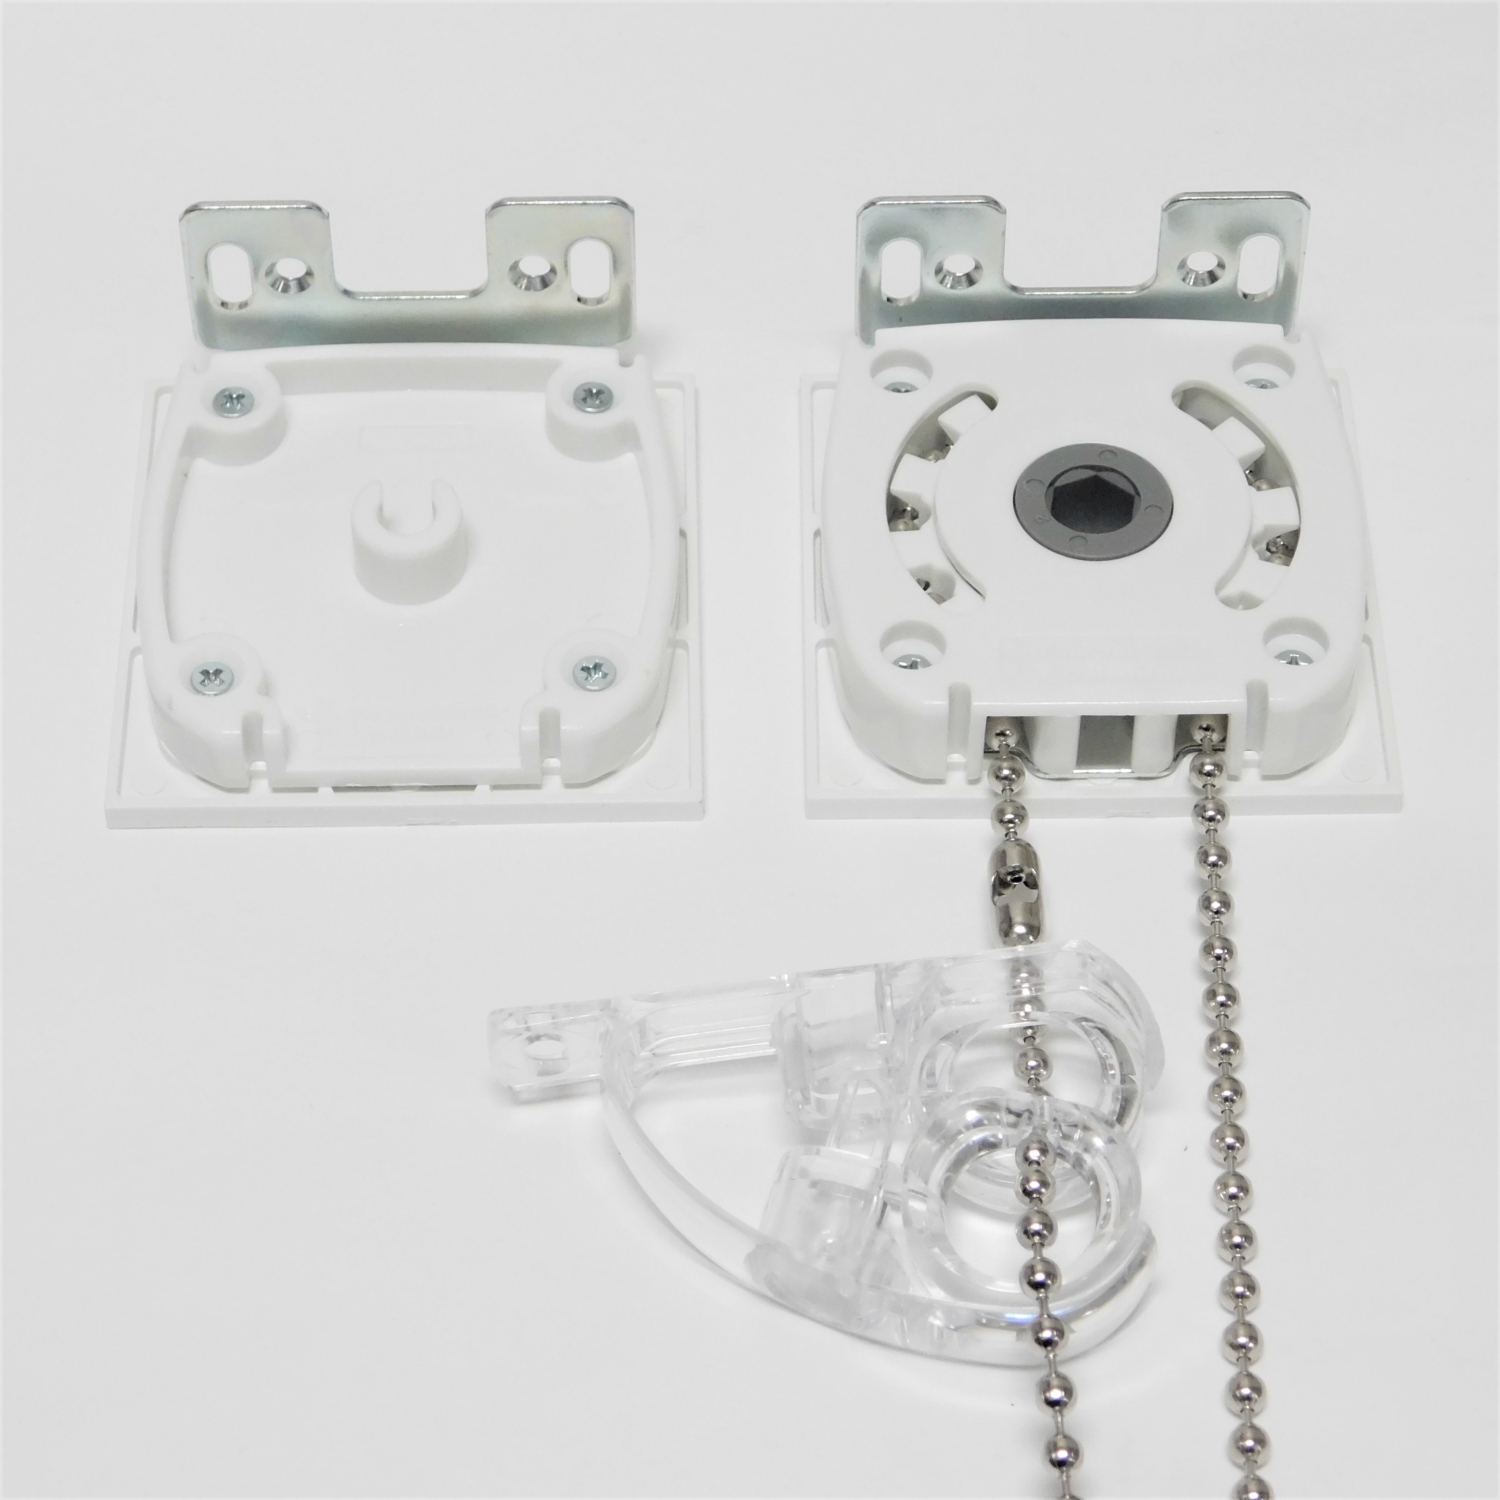 SODIAL Roller Blind Shade Cluth Bracket Bead Chain 28mm Kit R 